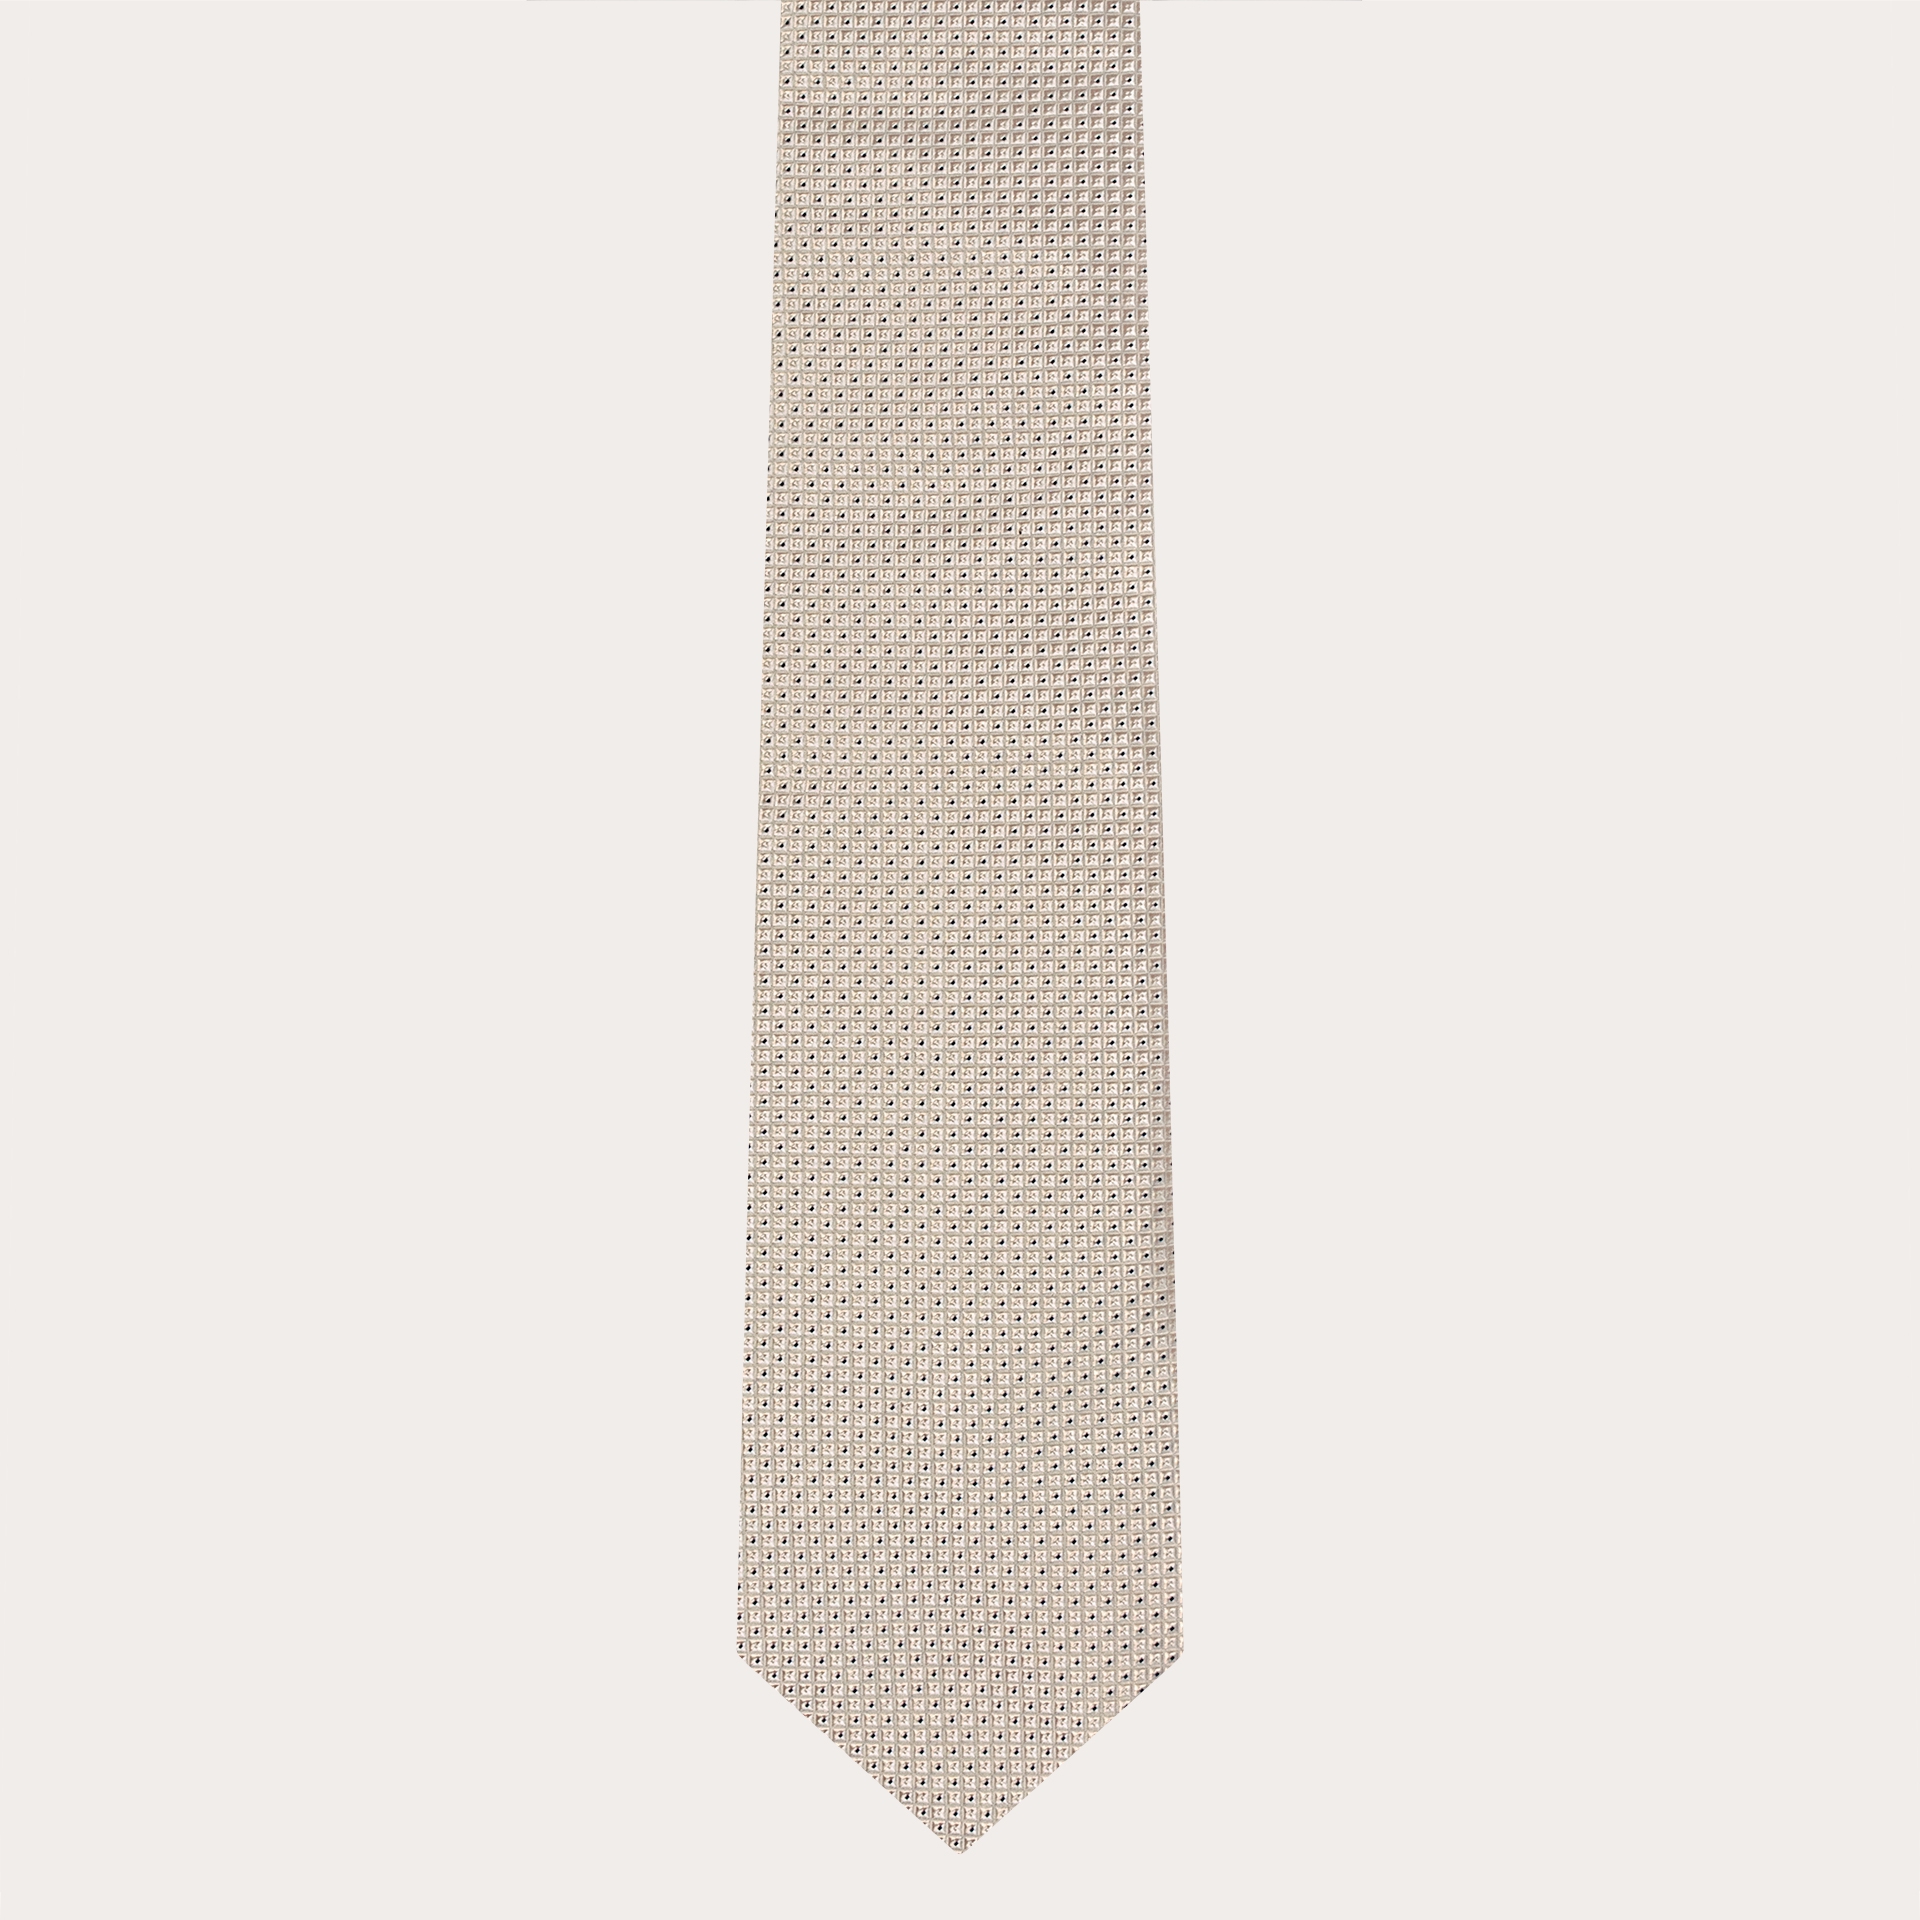 Cravatta in seta jacquard, avorio con microfantasia blu